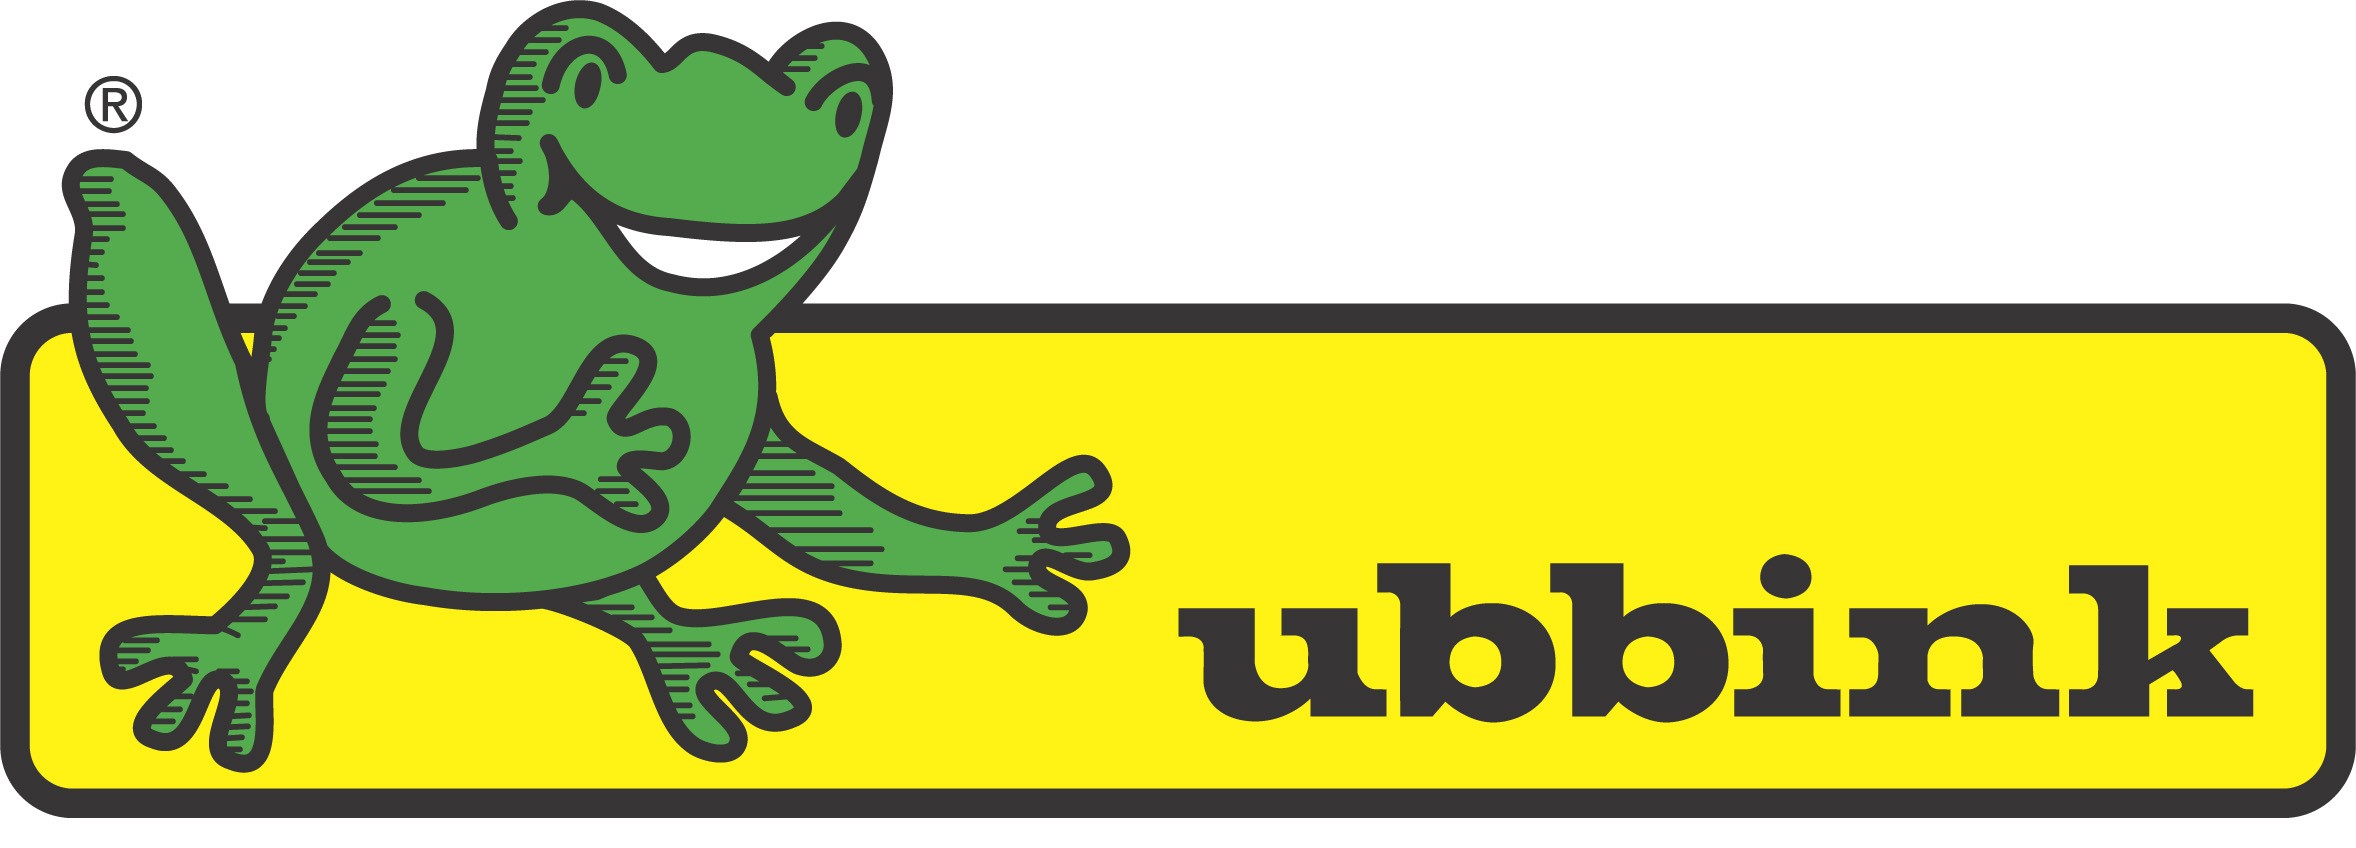 Logo Ubbink.jpg